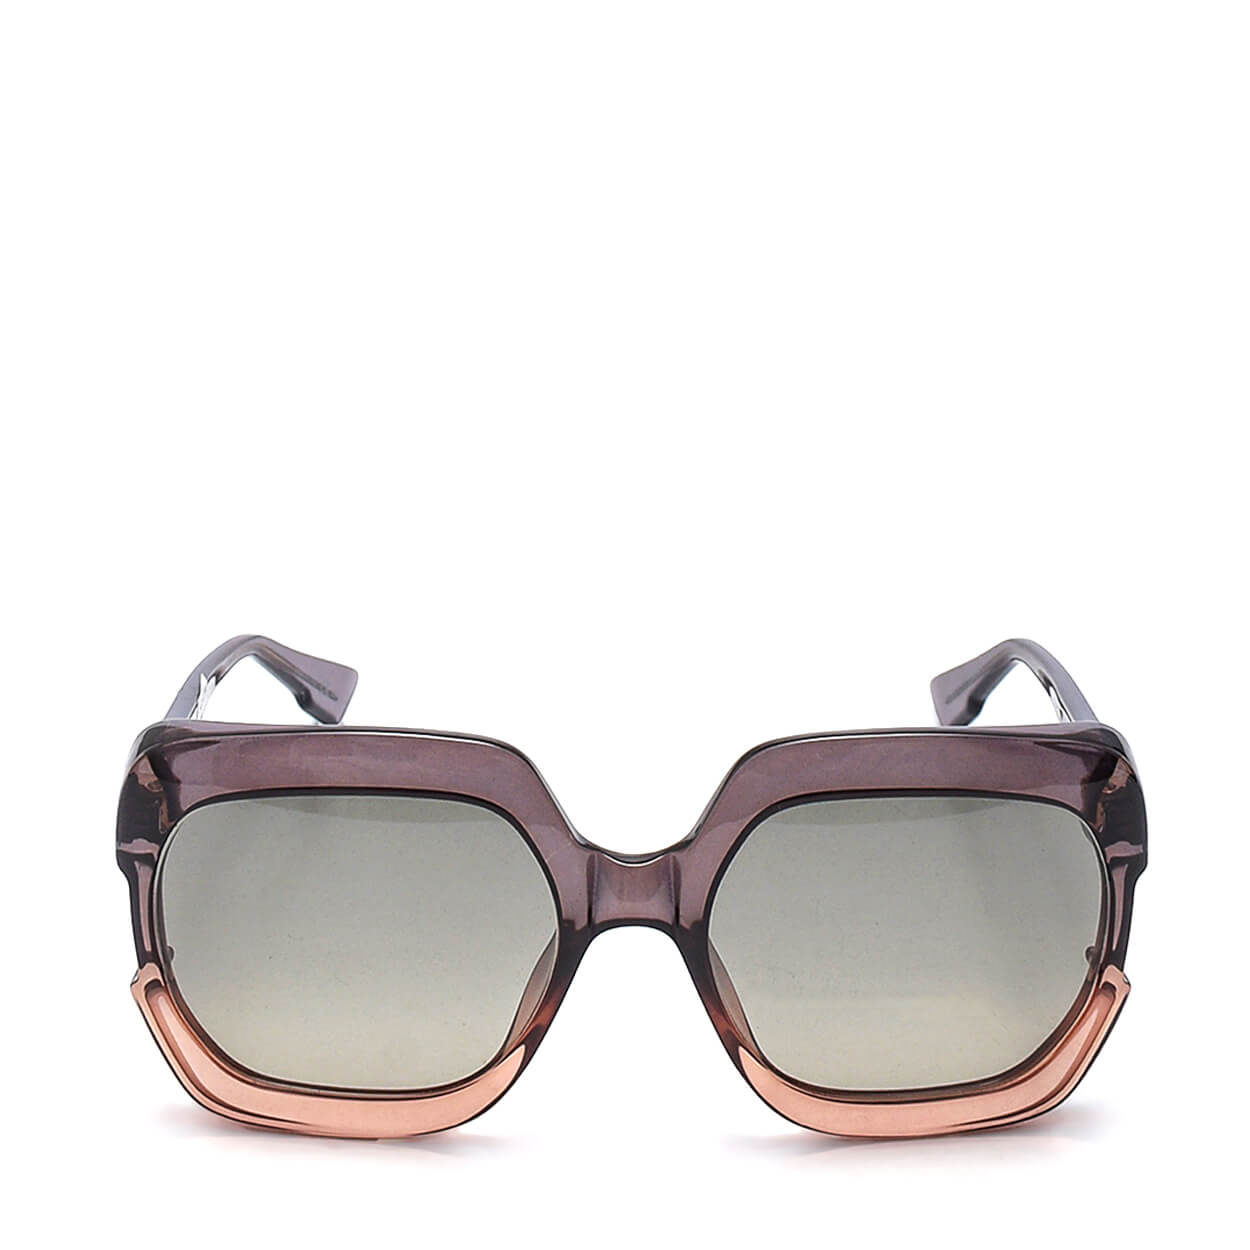 Christian Dior - Degrade Acetate Vintage Sunglasses